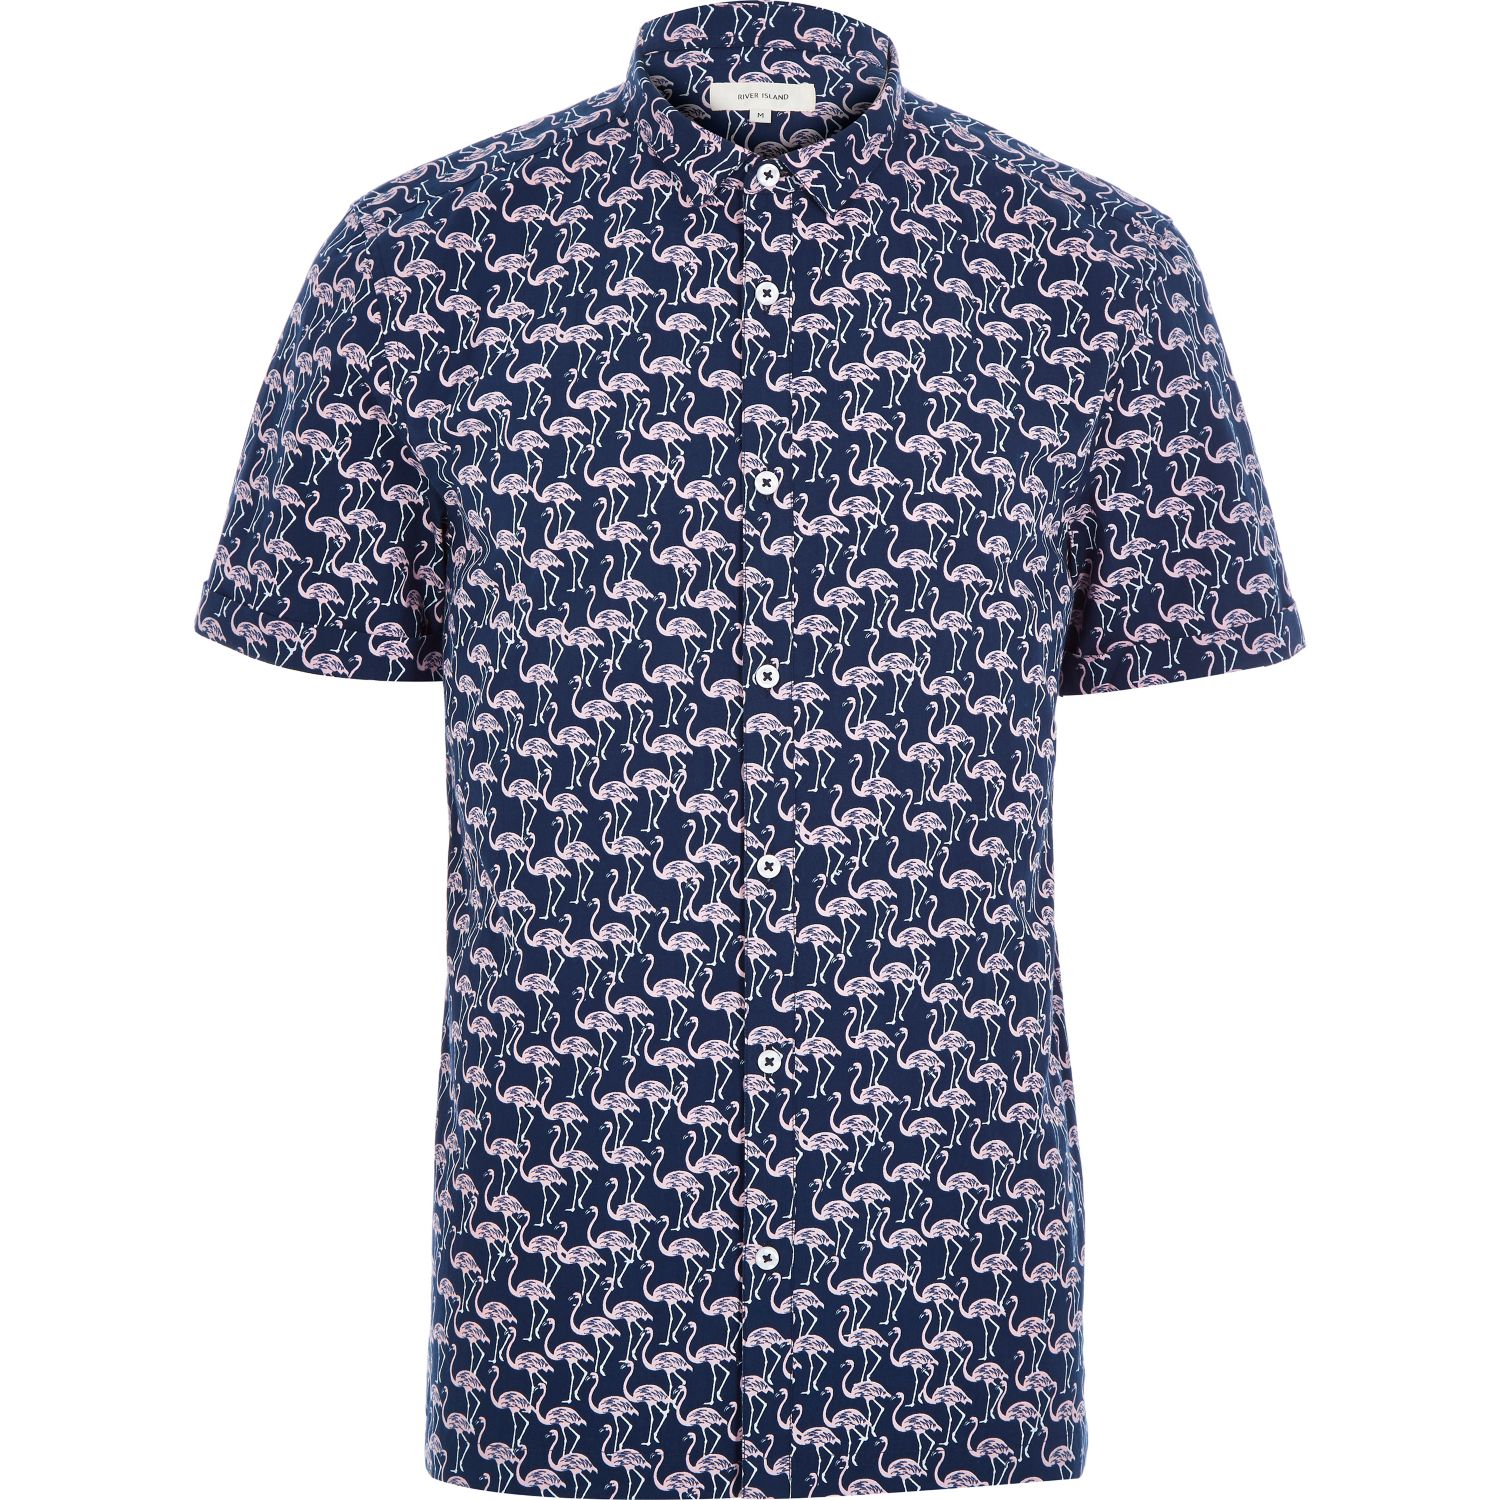 Lyst - River Island Navy Flamingo Print Short Sleeve Shirt in Blue for Men